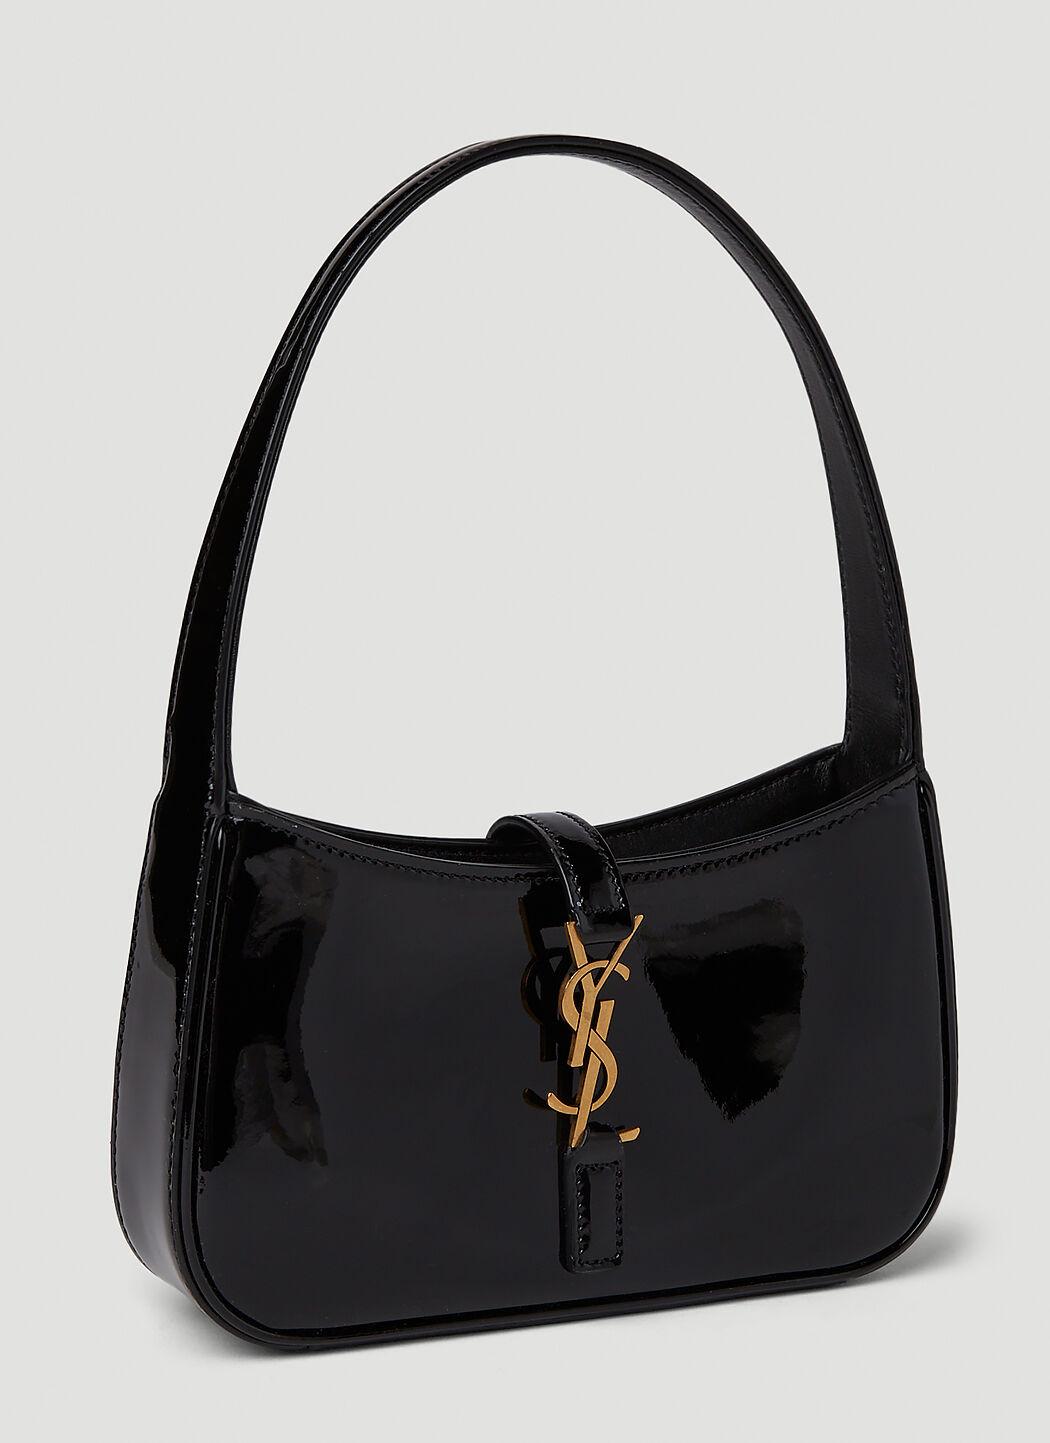 Saint Laurent Ysl Hobo 5a7 Mini Shoulder Bag in Black | Lyst Canada